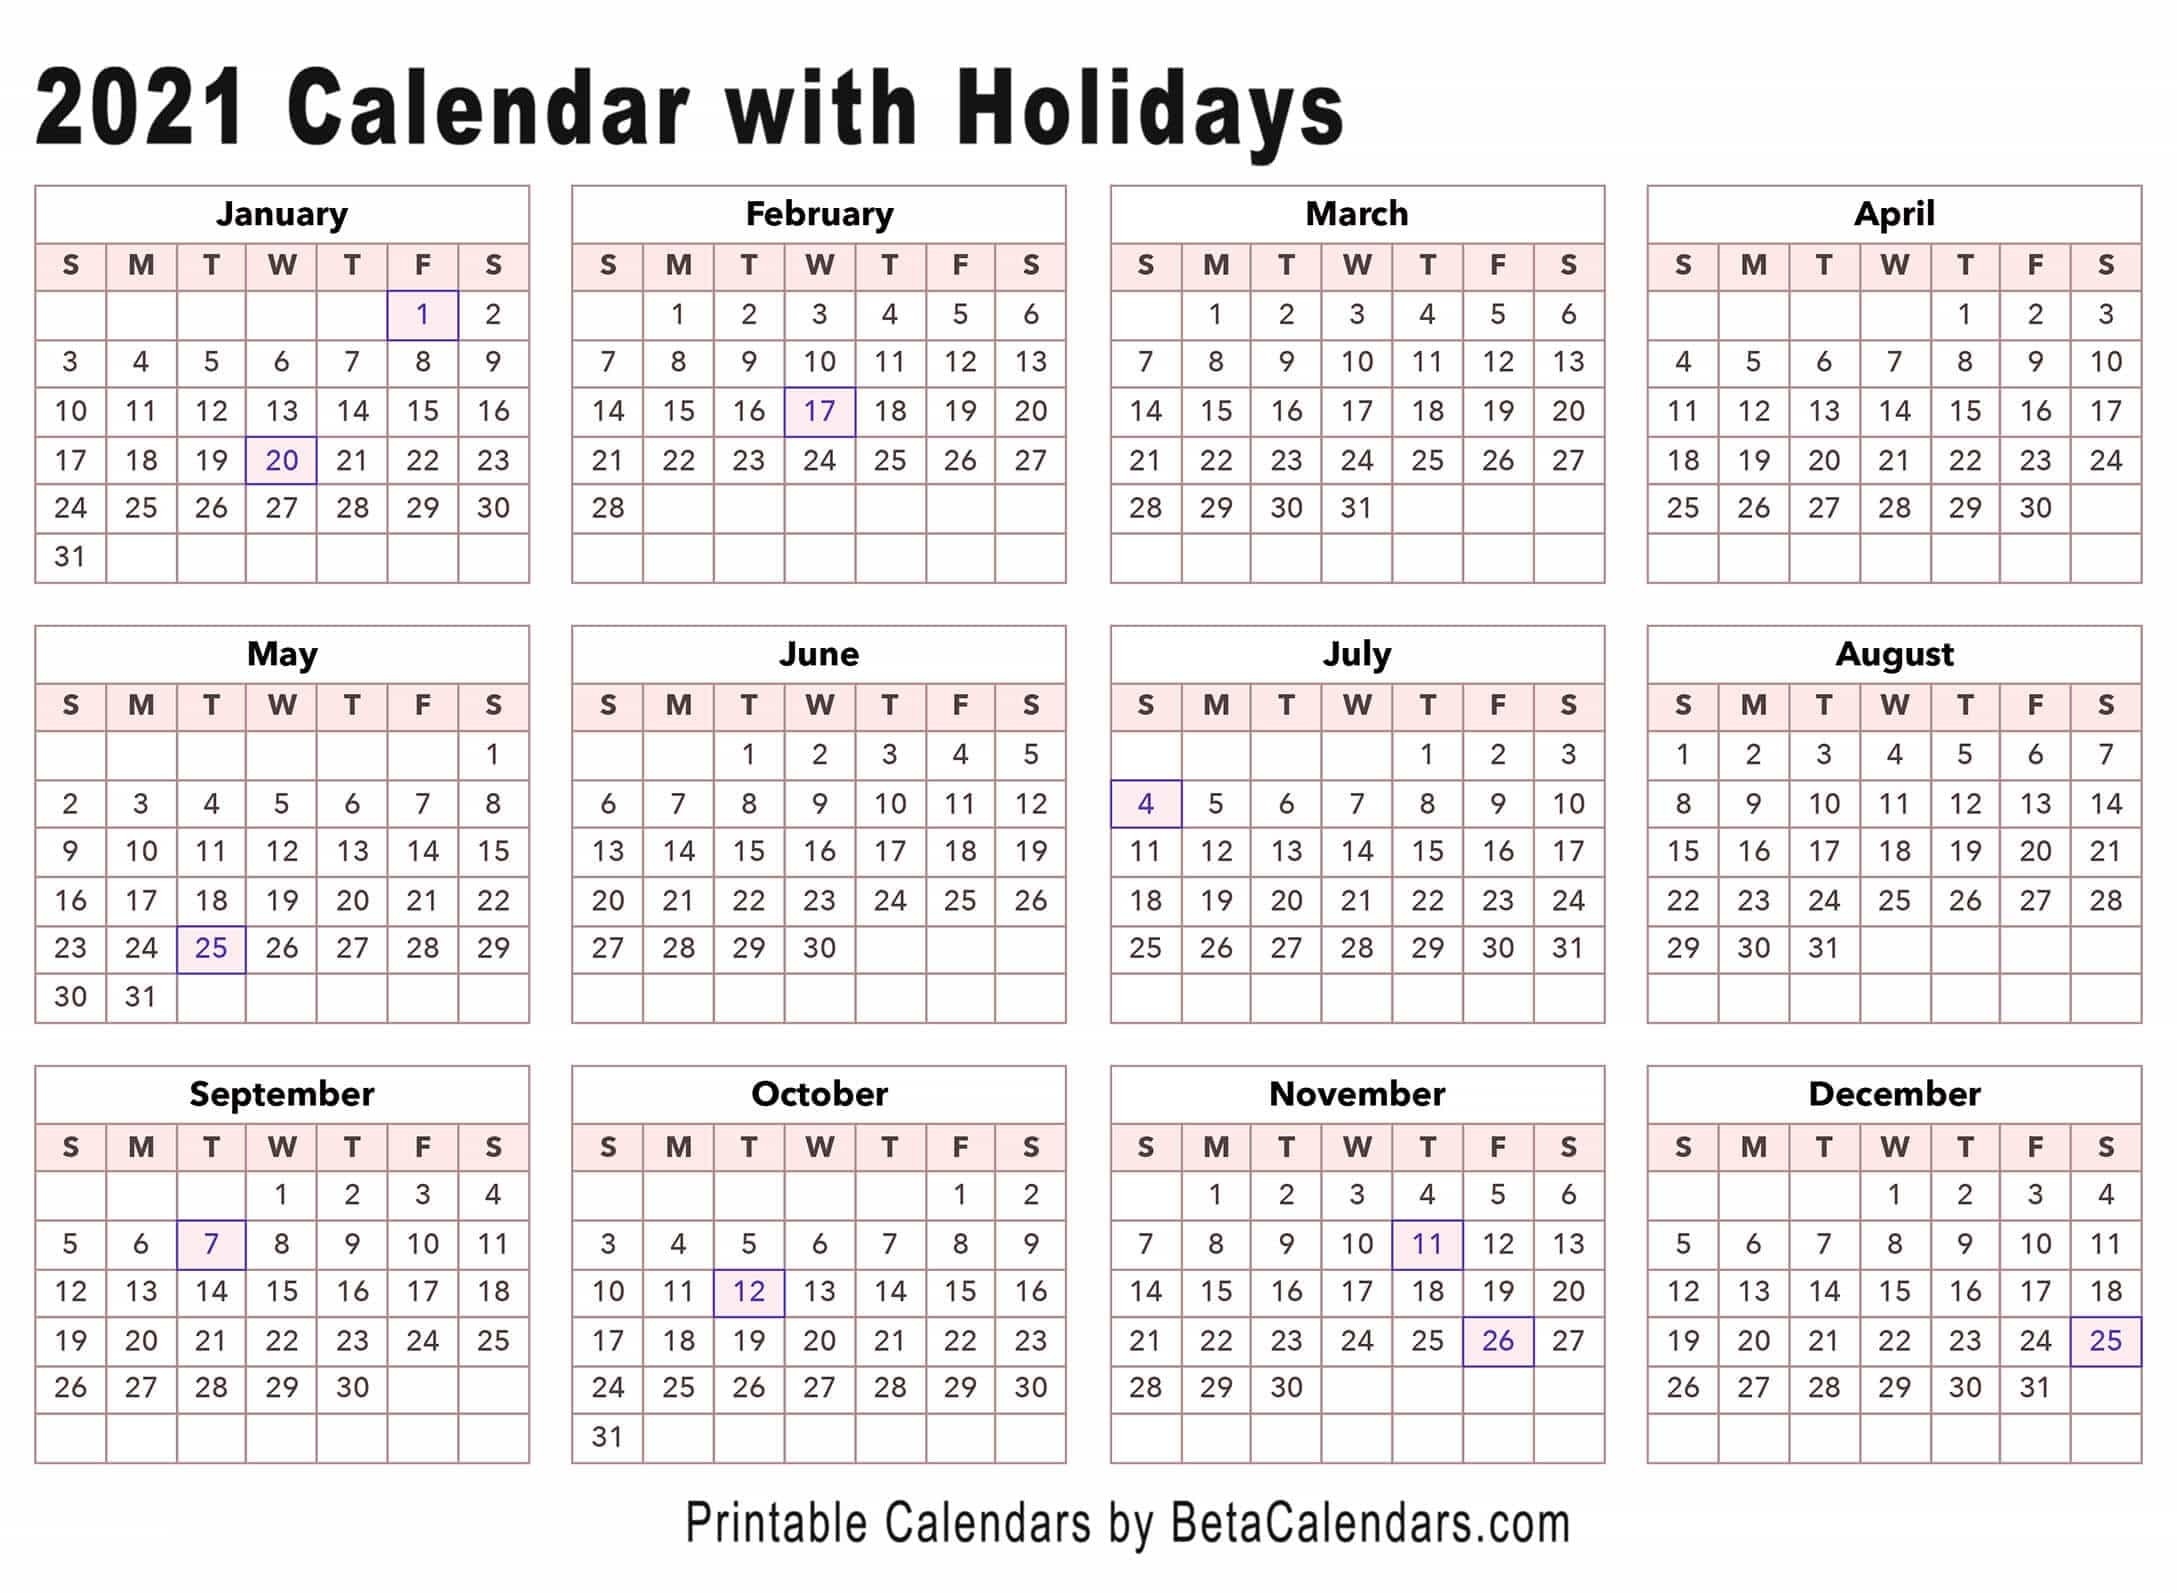 2021 Calendar - Beta Calendars-2021 Vacation Calandar